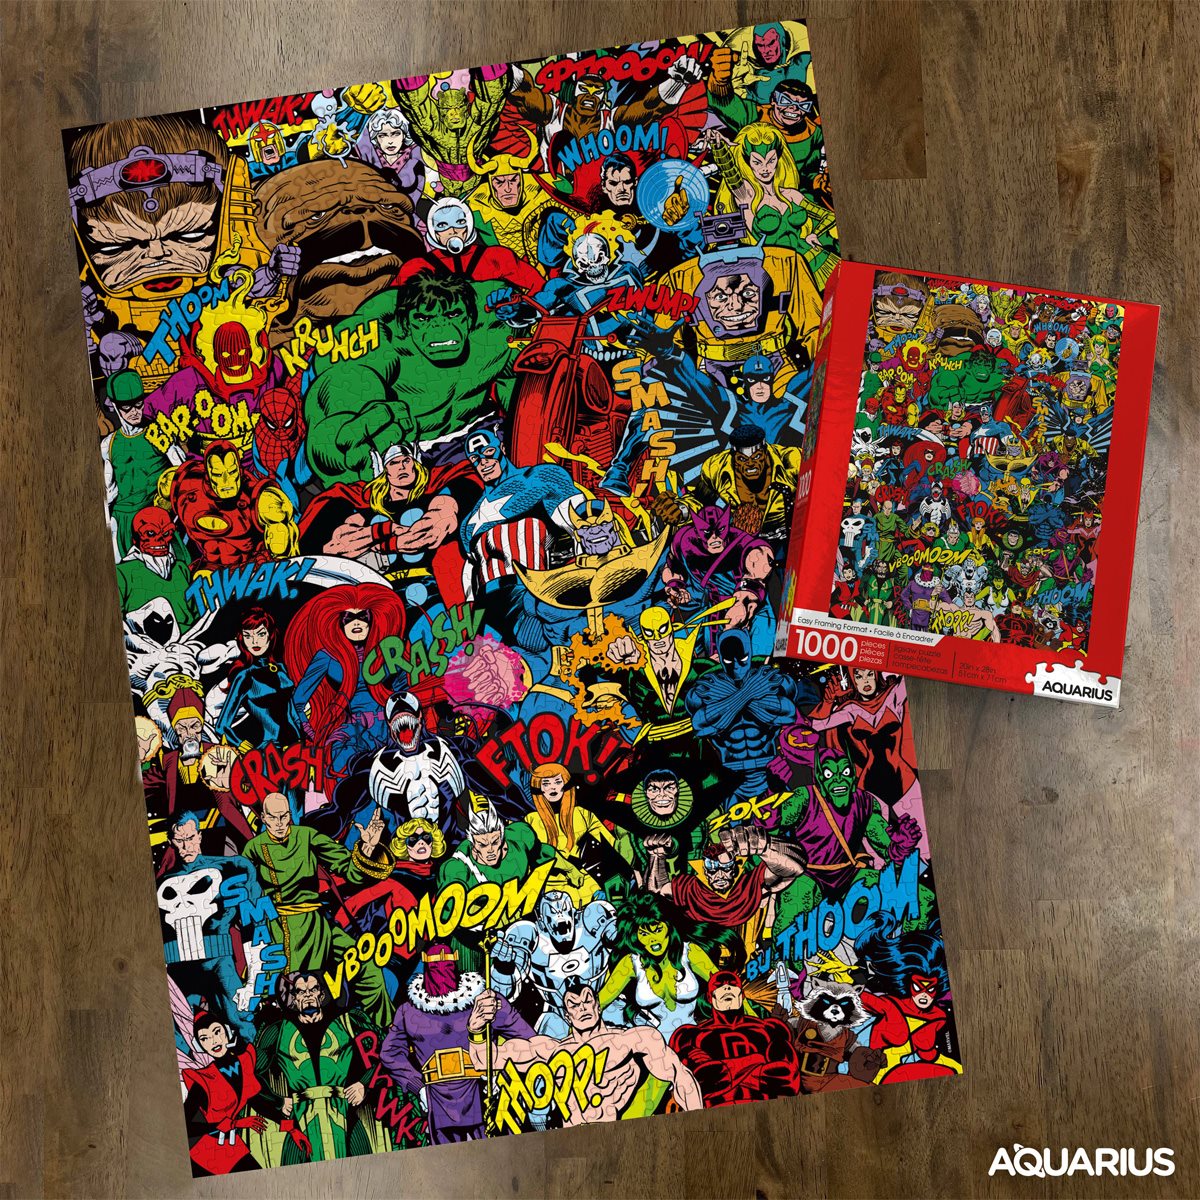 Puzzle Marvel, 1 000 pieces